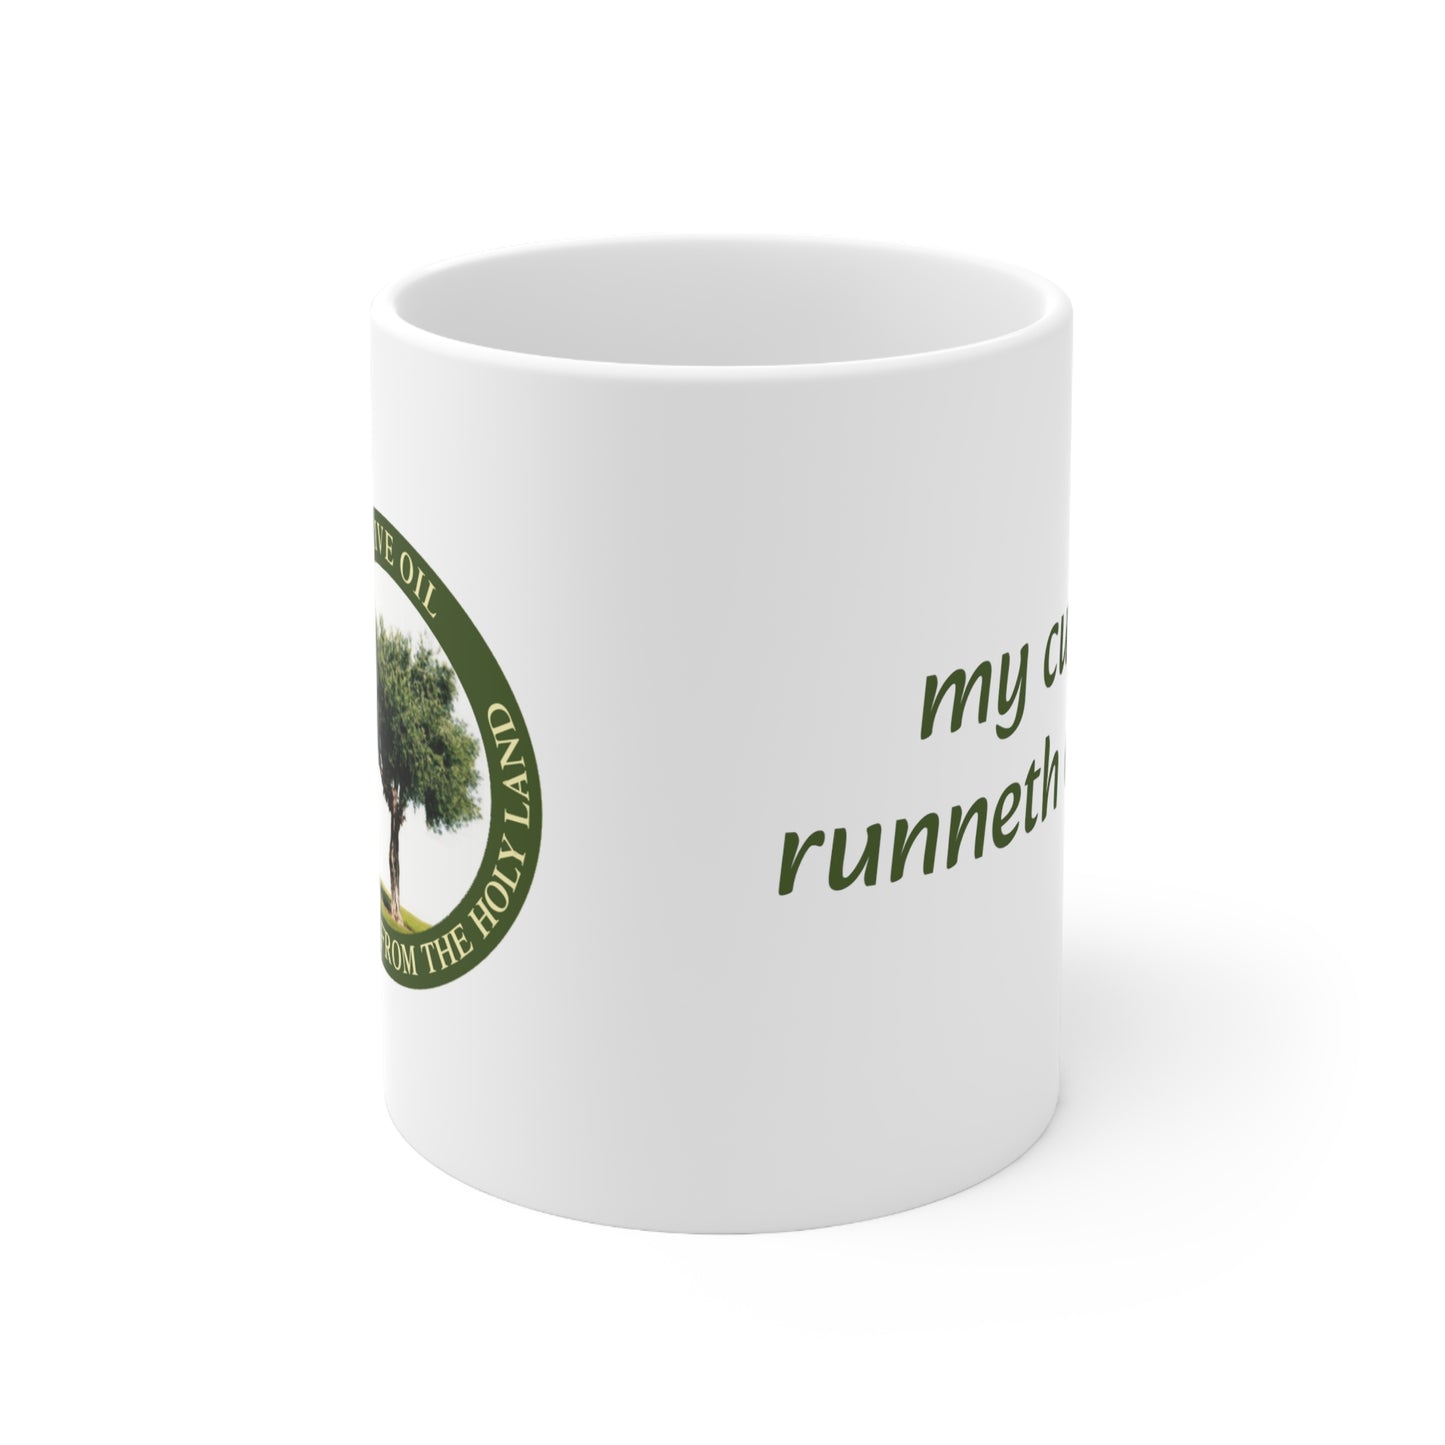 My cup runneth over - inspirational ceramic Mug 11oz - Green writing